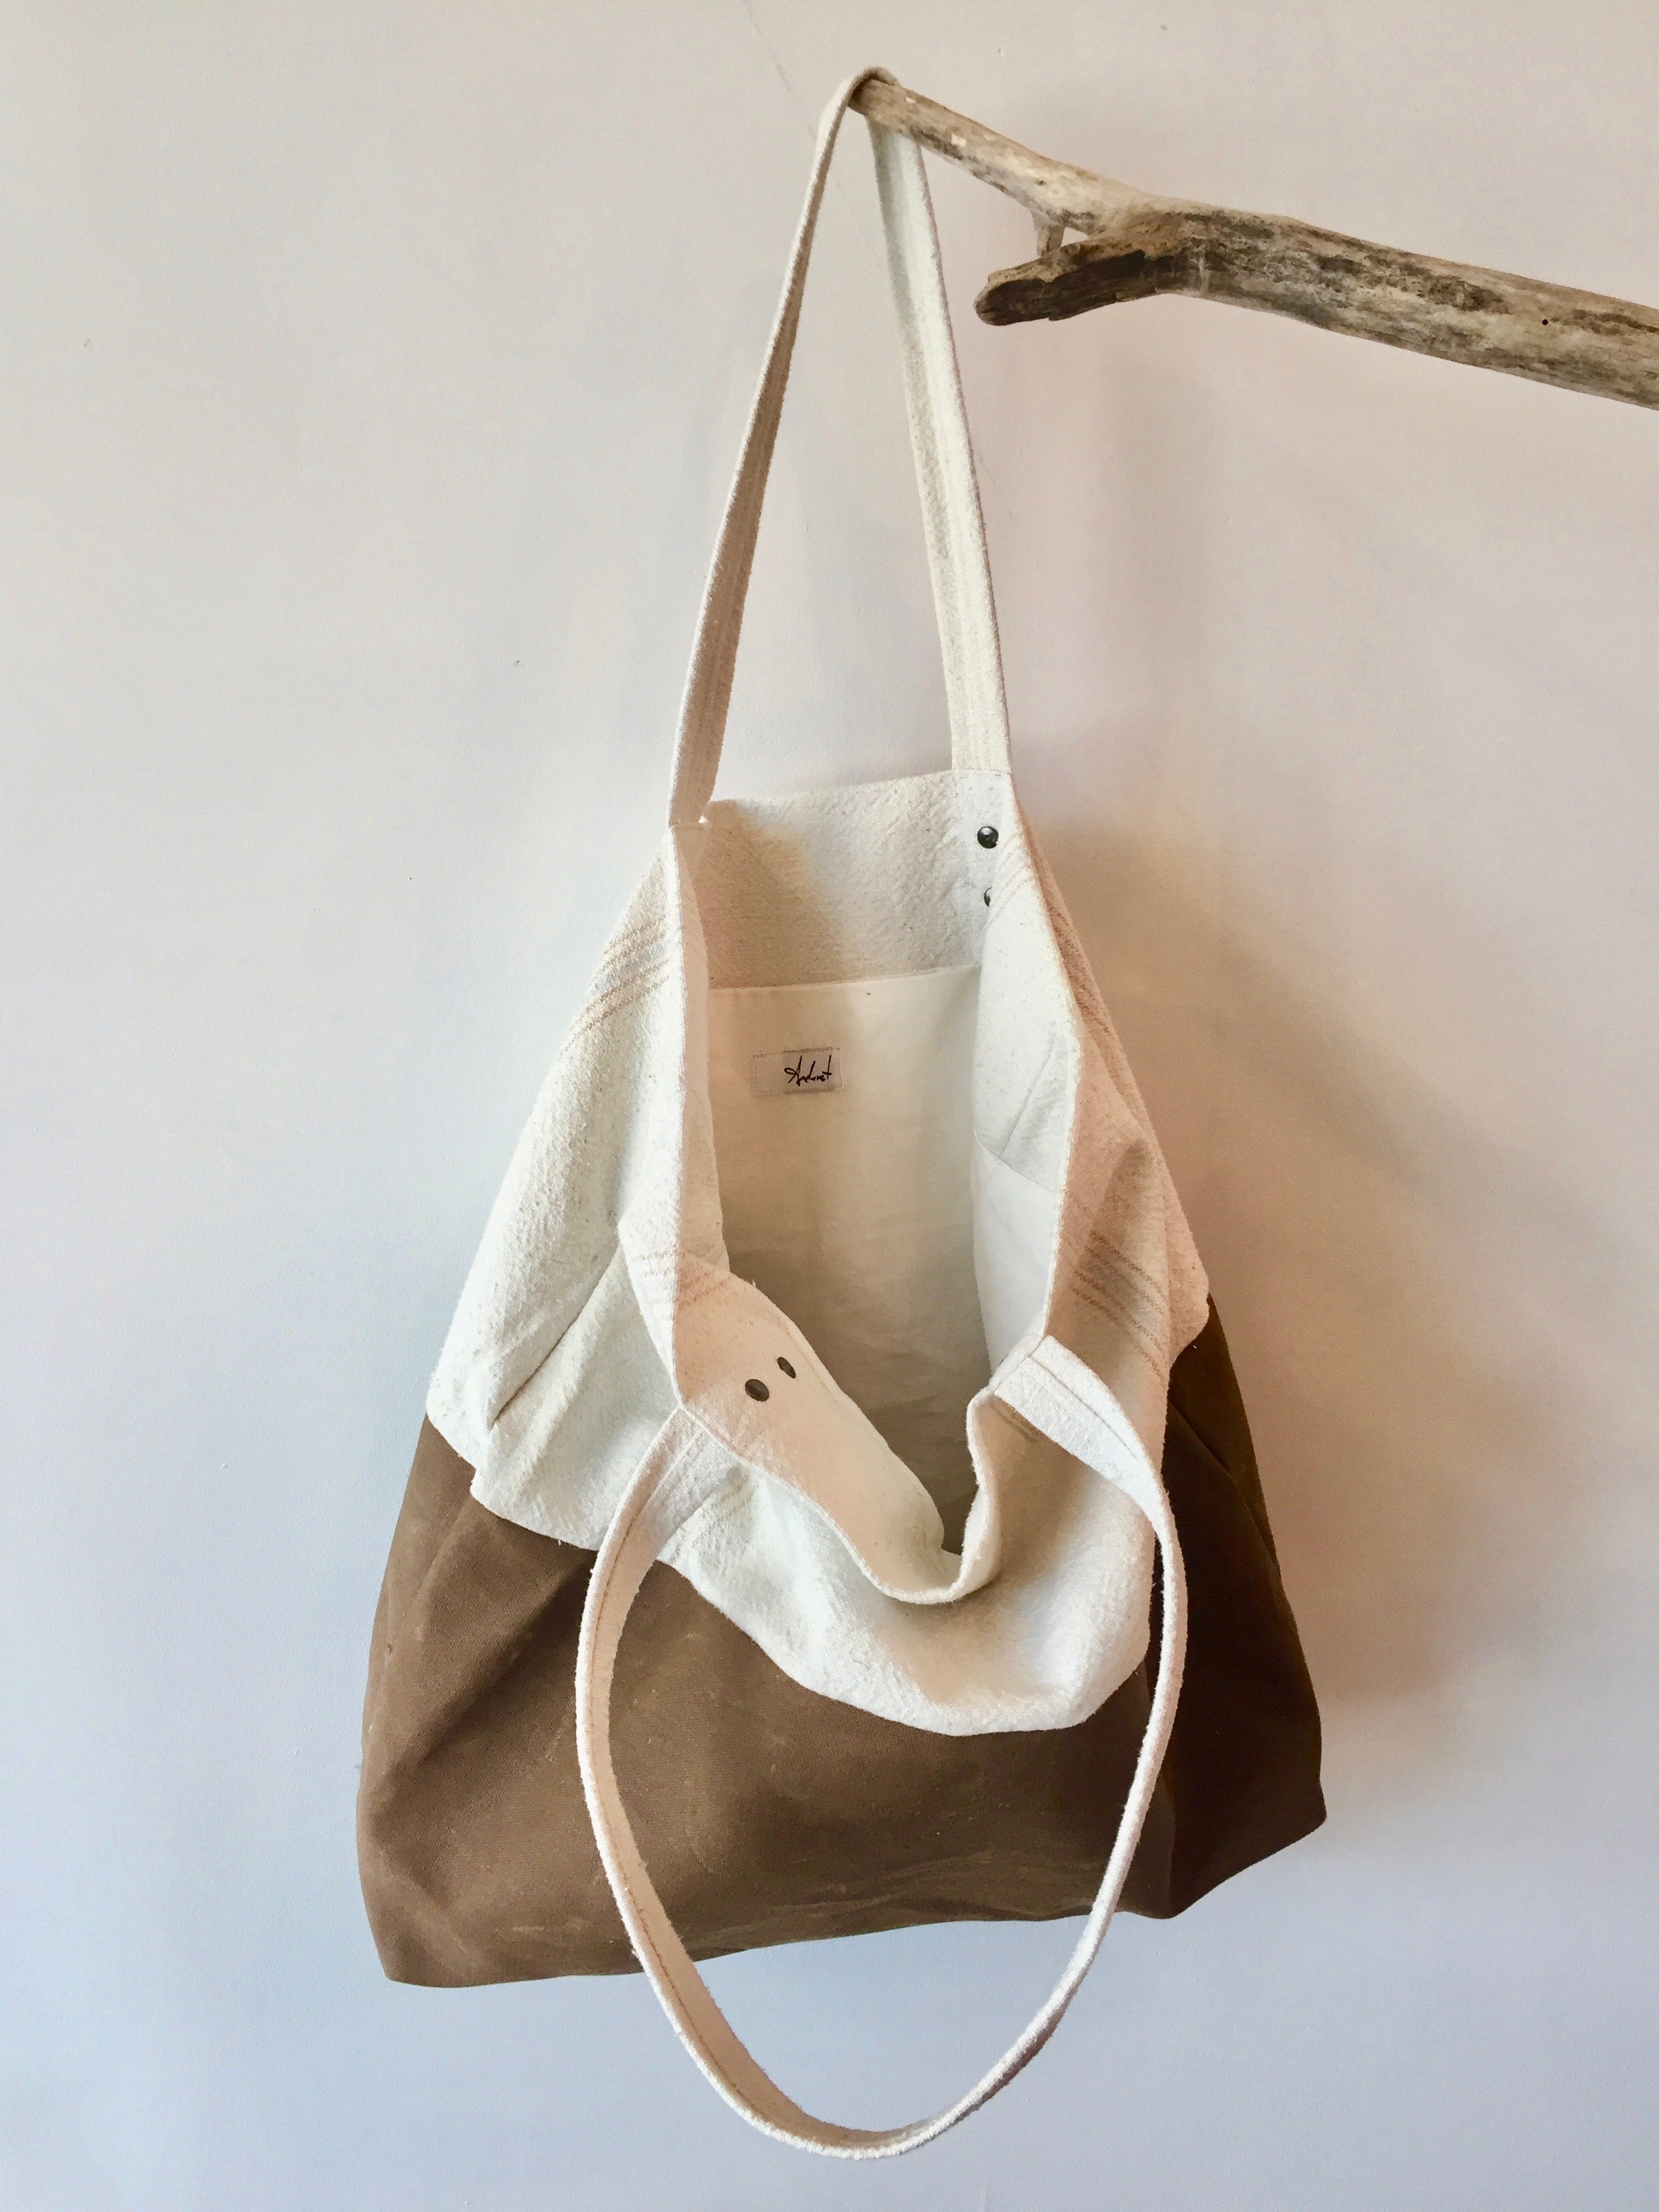 Linen/ Waxed Canvas Tote Bag